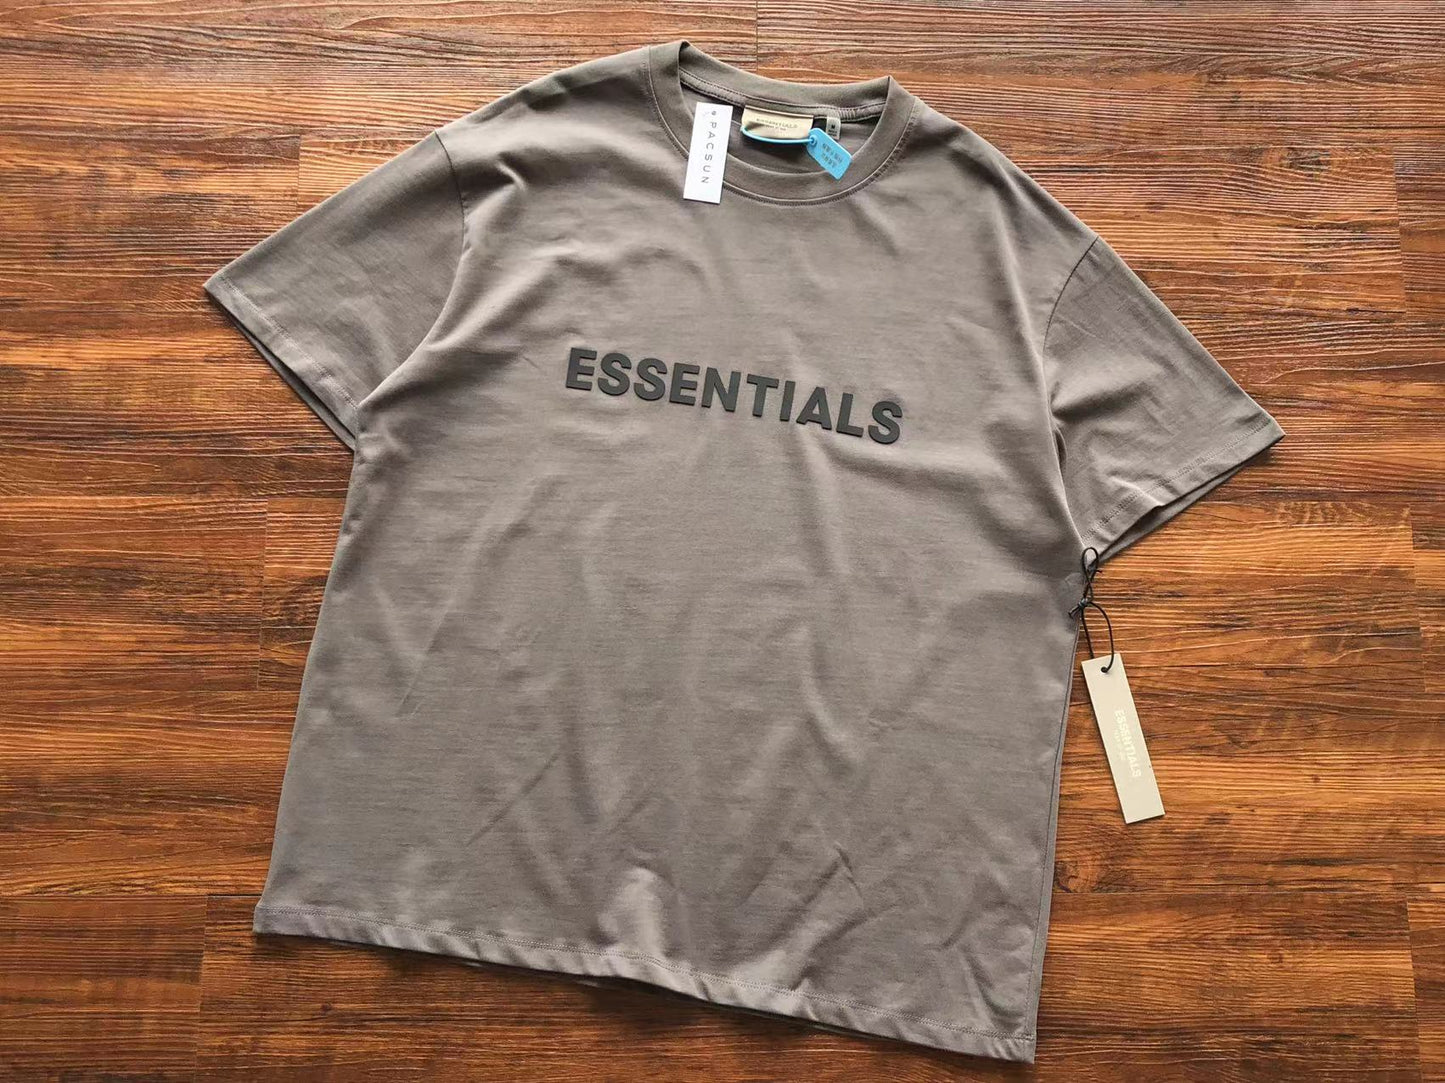 FOG Essentials Tshirt Hk452908